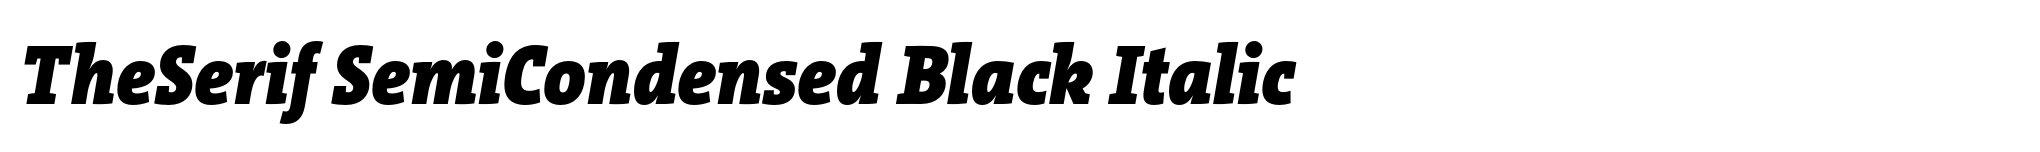 TheSerif SemiCondensed Black Italic image